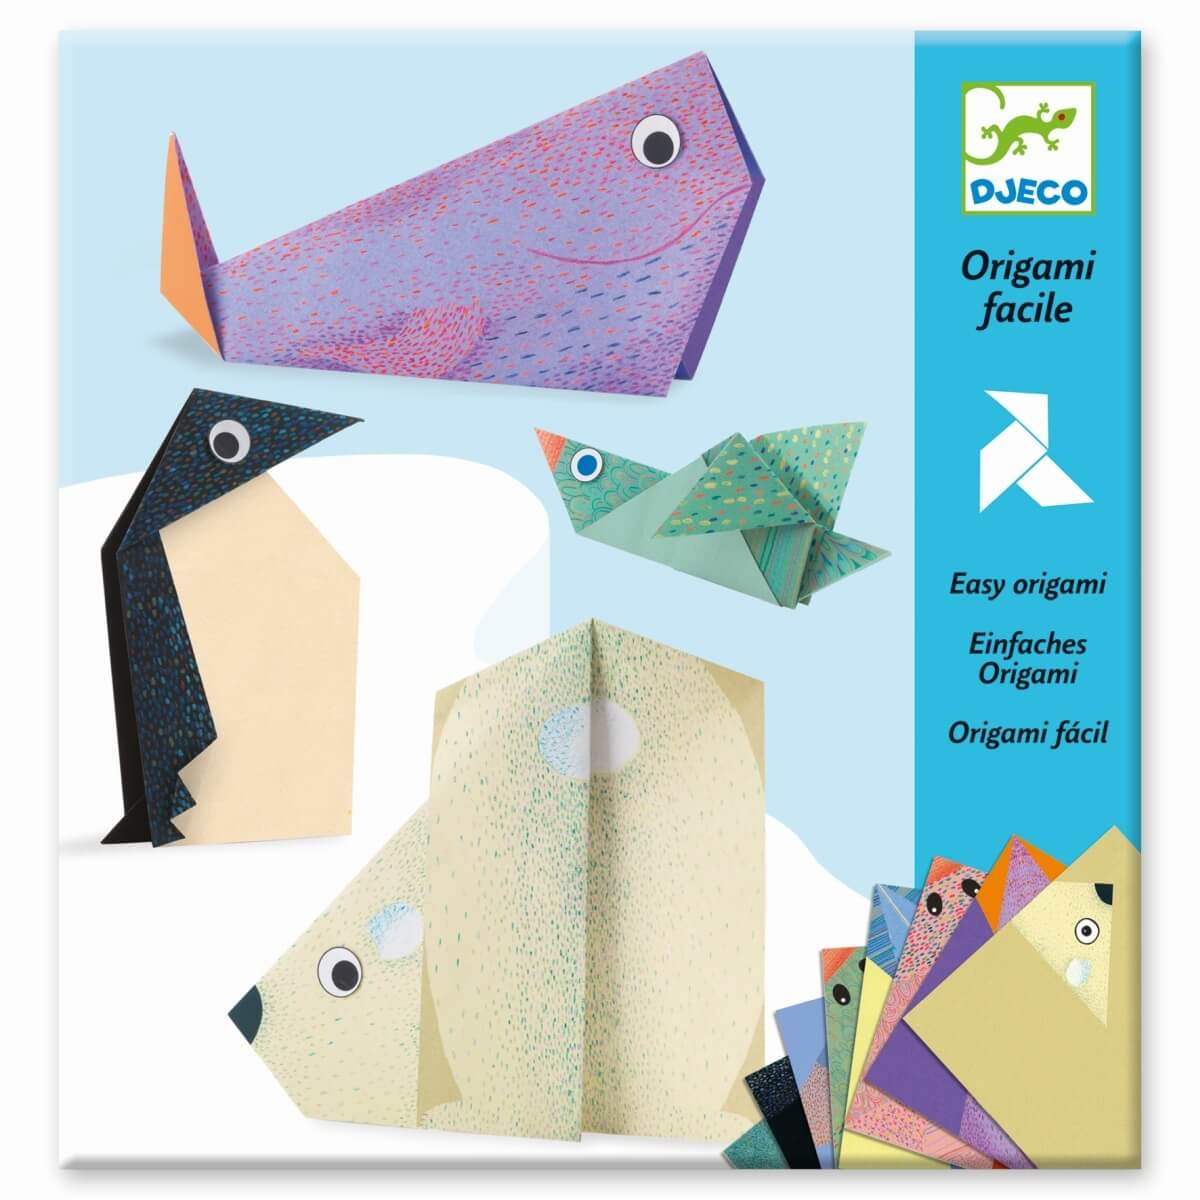 Djeco Bastelset Origami Tiere Der Arktis dedans Origami Petit Bateau